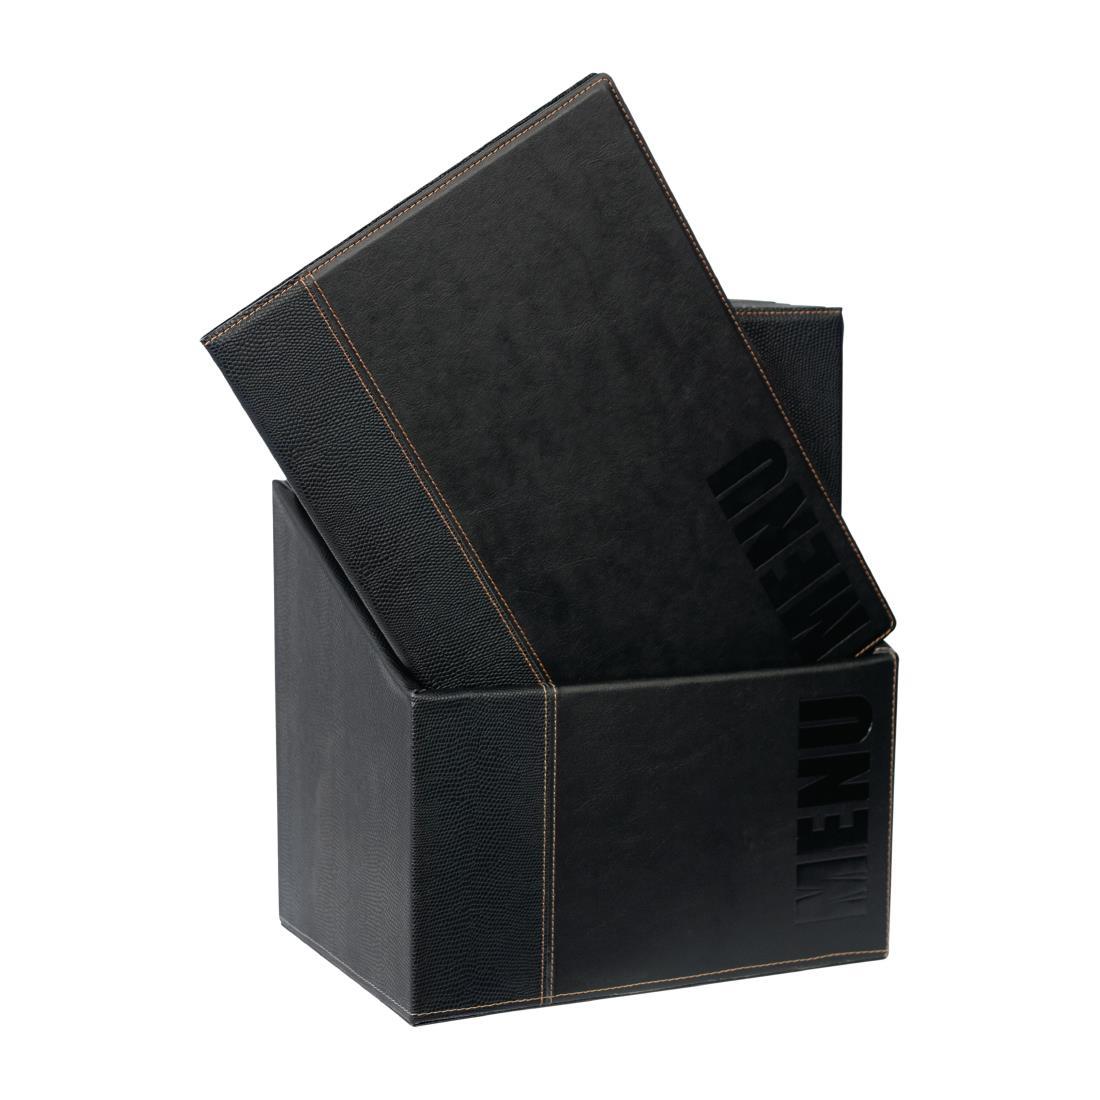 Securit Contemporary Menu Covers and Storage Box A4 Black (Pack of 20) - U266  - 1